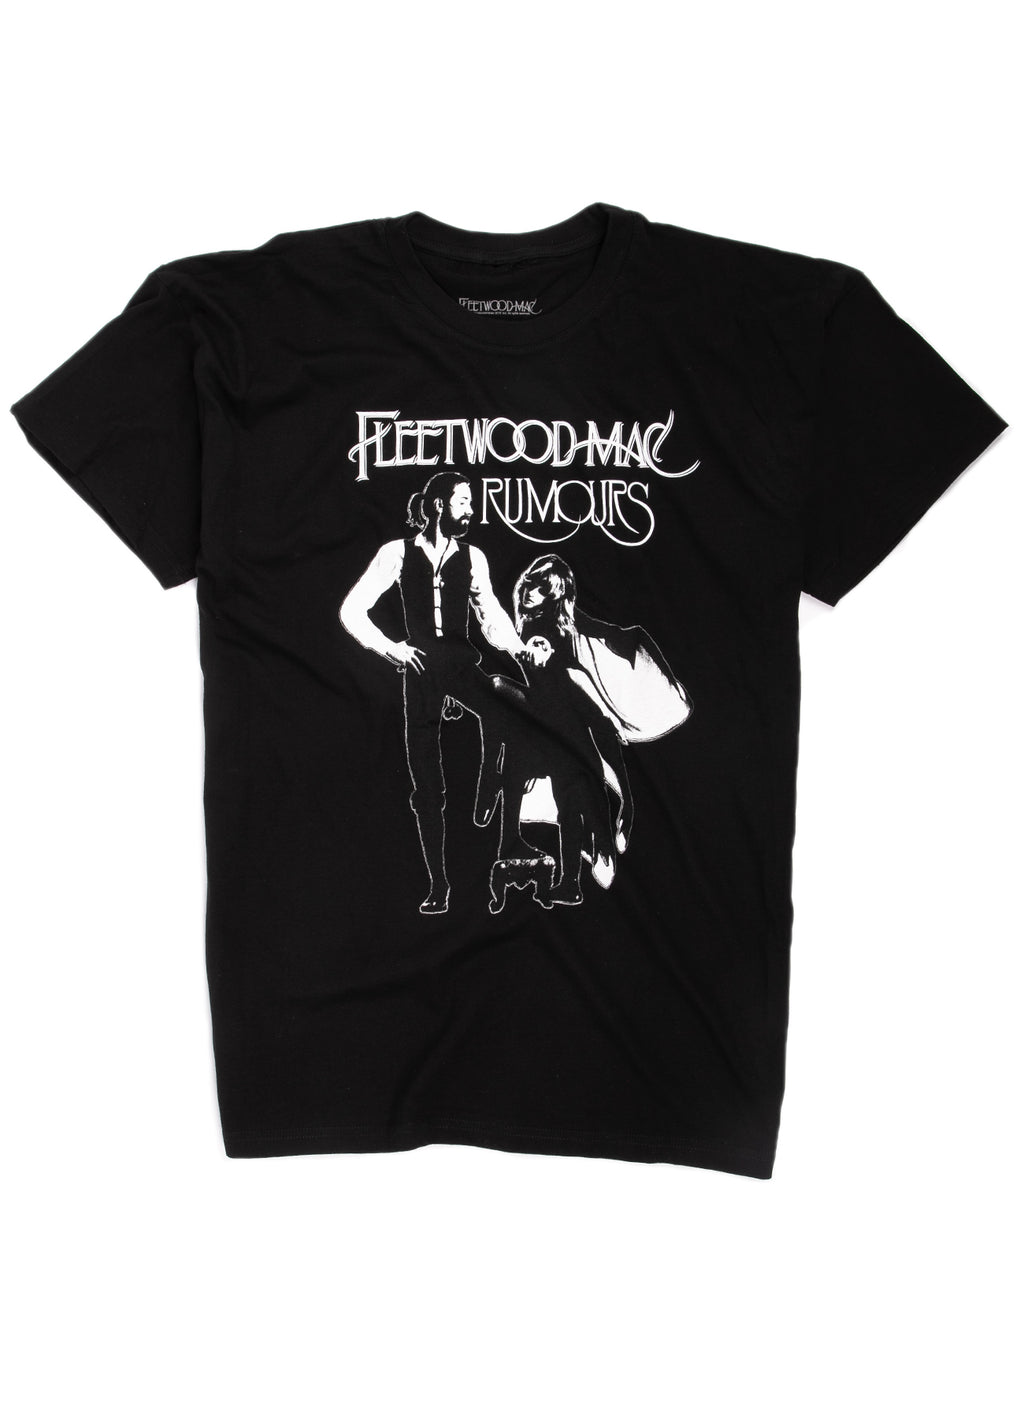 Fleetwood Mac rumors t-shirt.